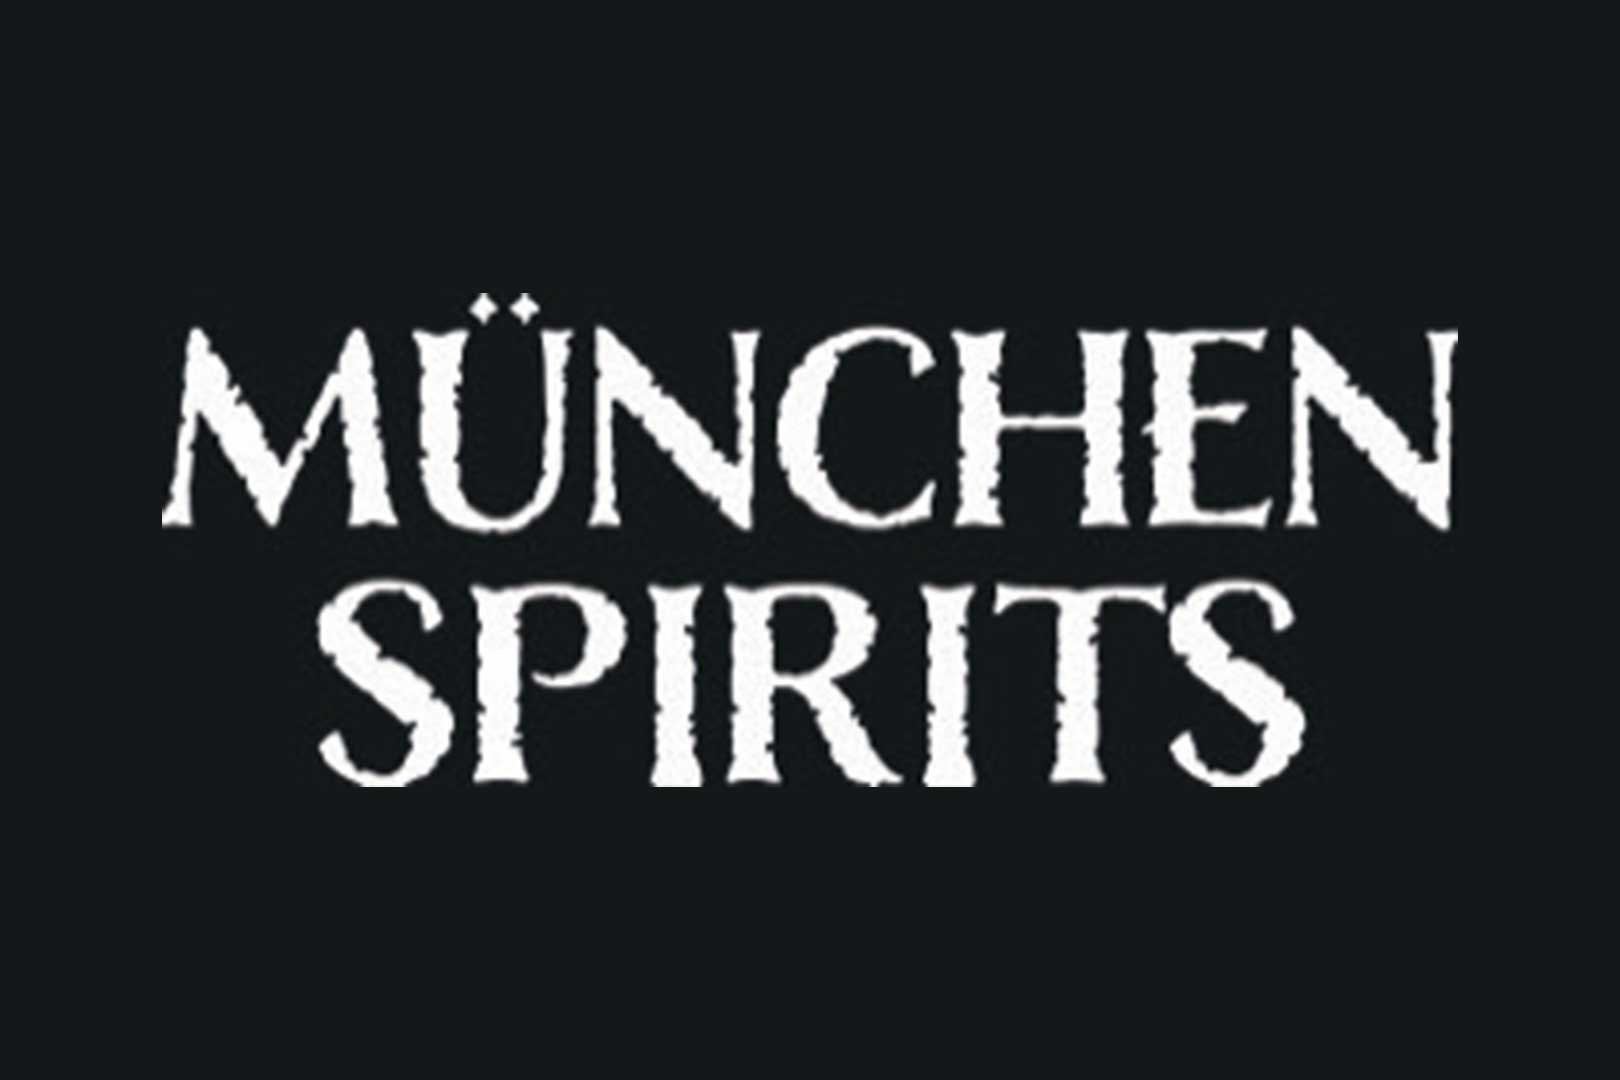 whisky event muenchen spirits muenchen WEB 3 2 1620x1080 itnyjnikudiy